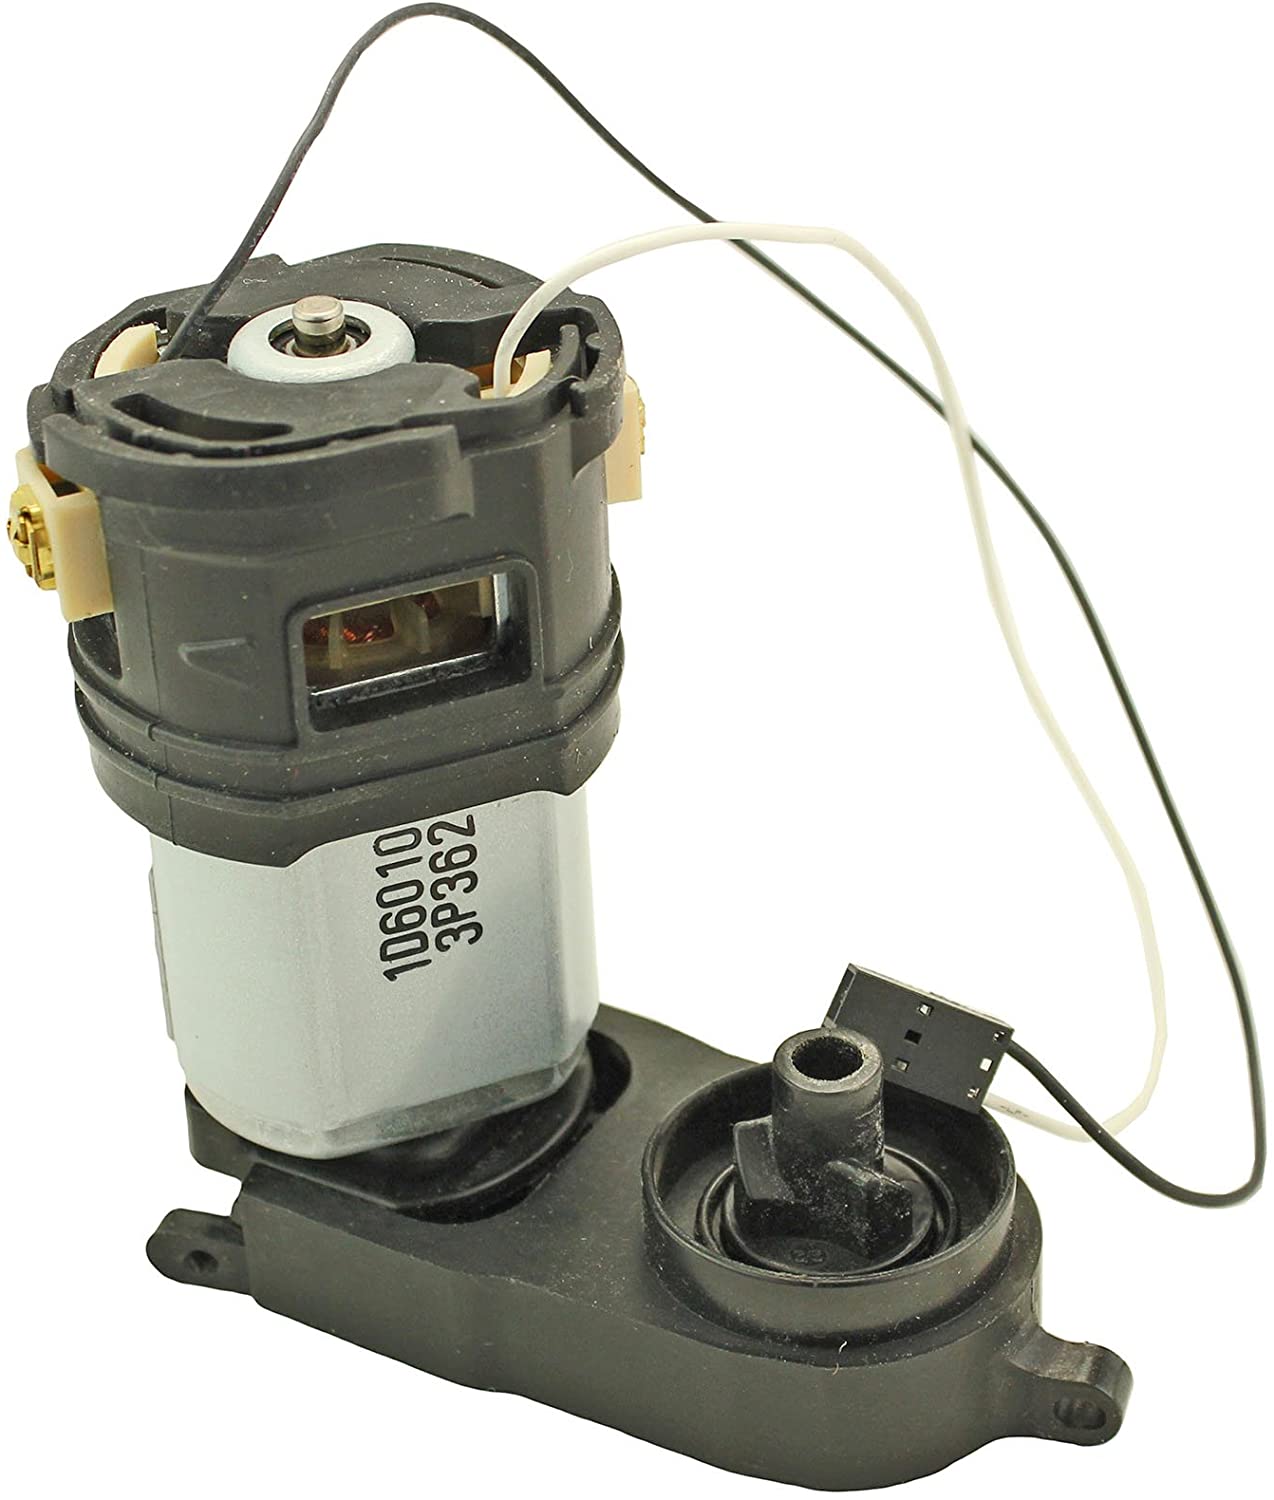 Brushroll Motor for Dyson DC24 DC24i Vacuum Cleaning Head Pre + Post Filter Kit